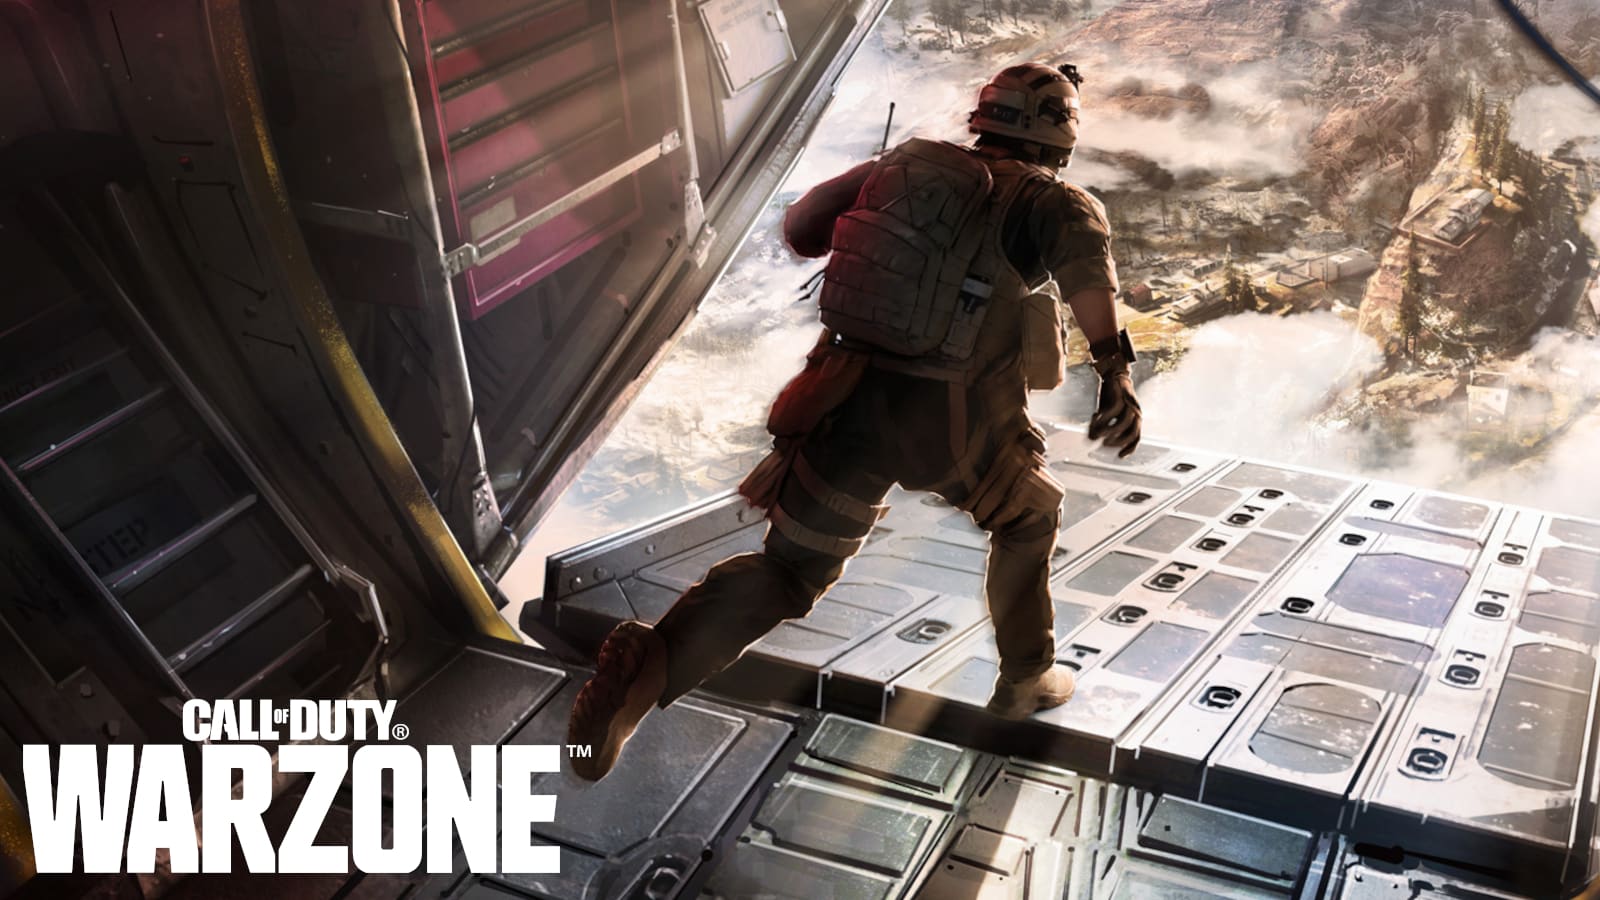 Call of Duty WARZONE Mobile: data de lançamento, suporte a